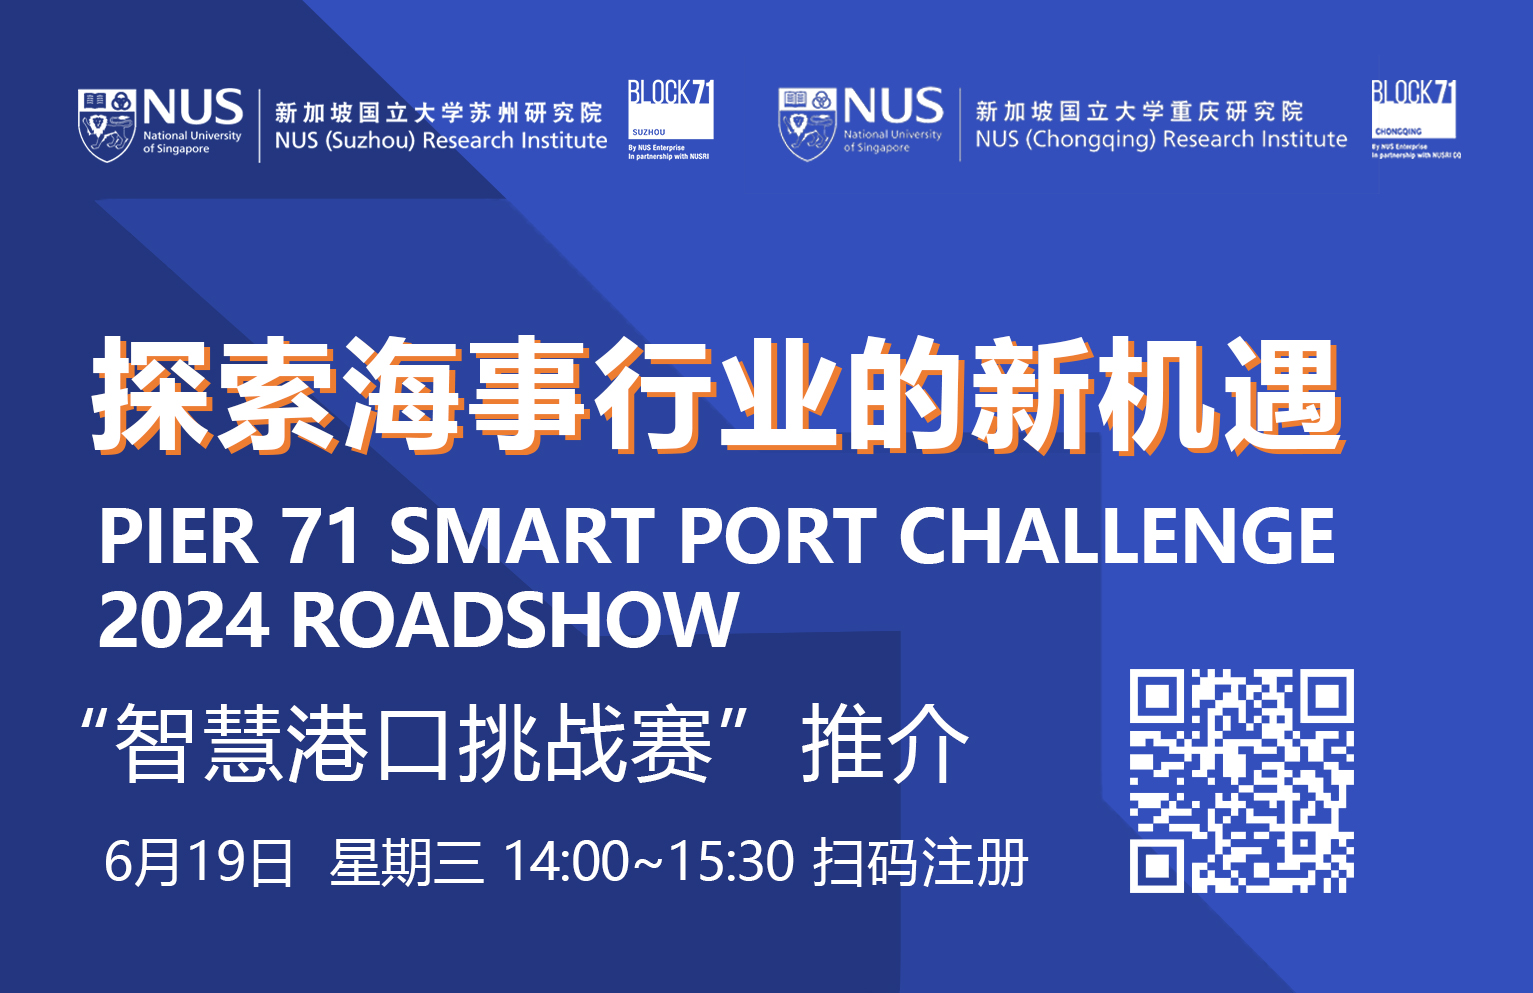 PIER71™ Smart Port Challenge 2024 Roadshow: China